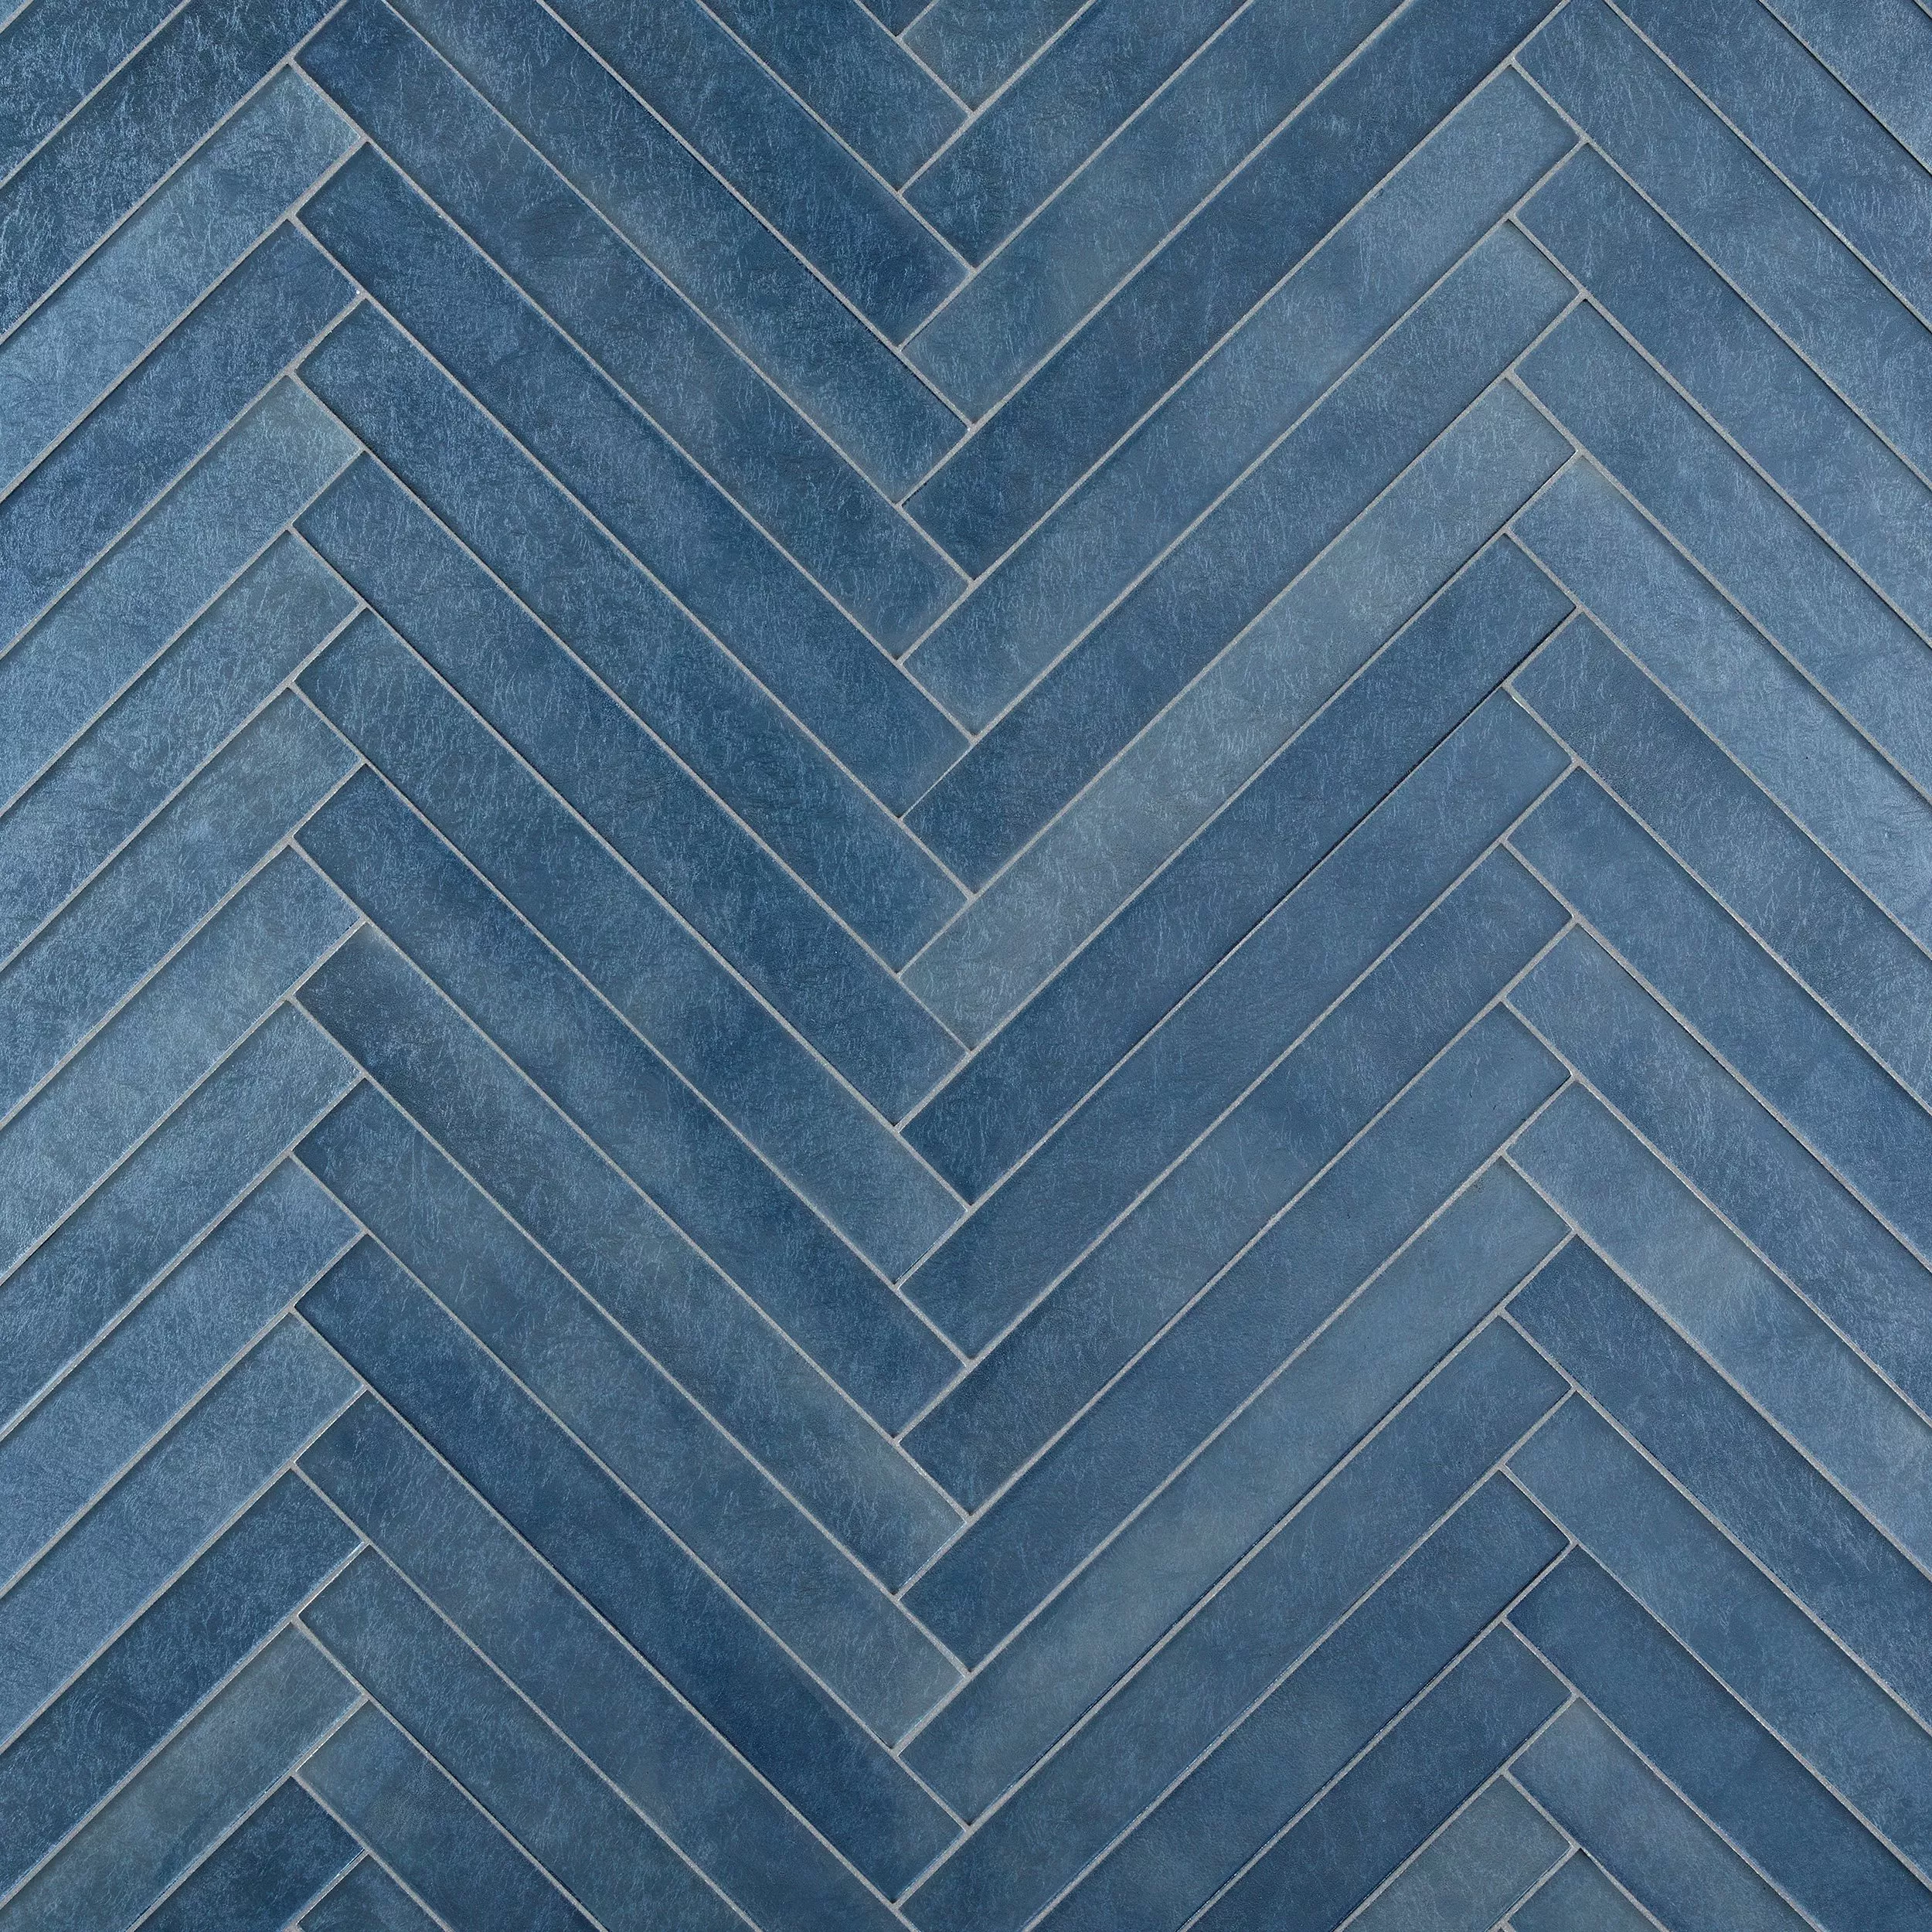 Serenity Azul Glass Tile